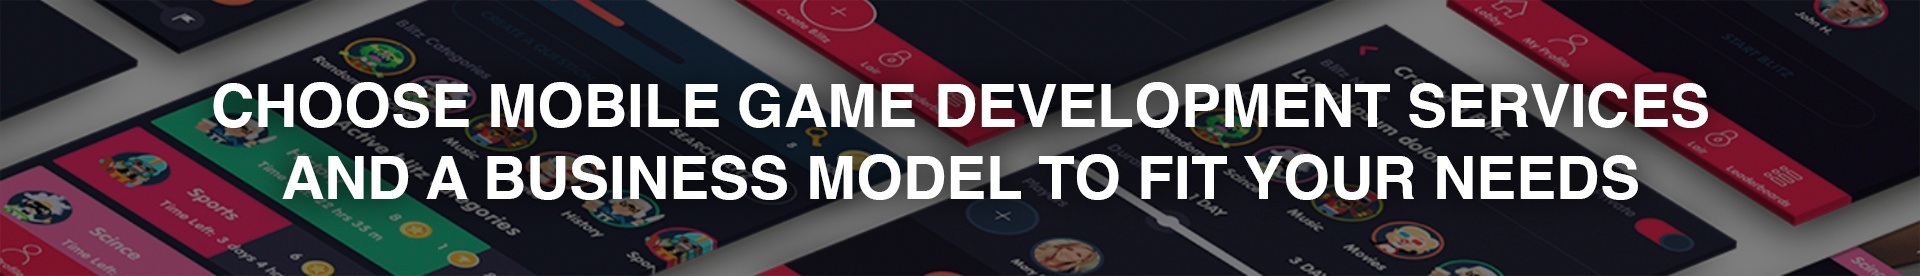 mobile game development services